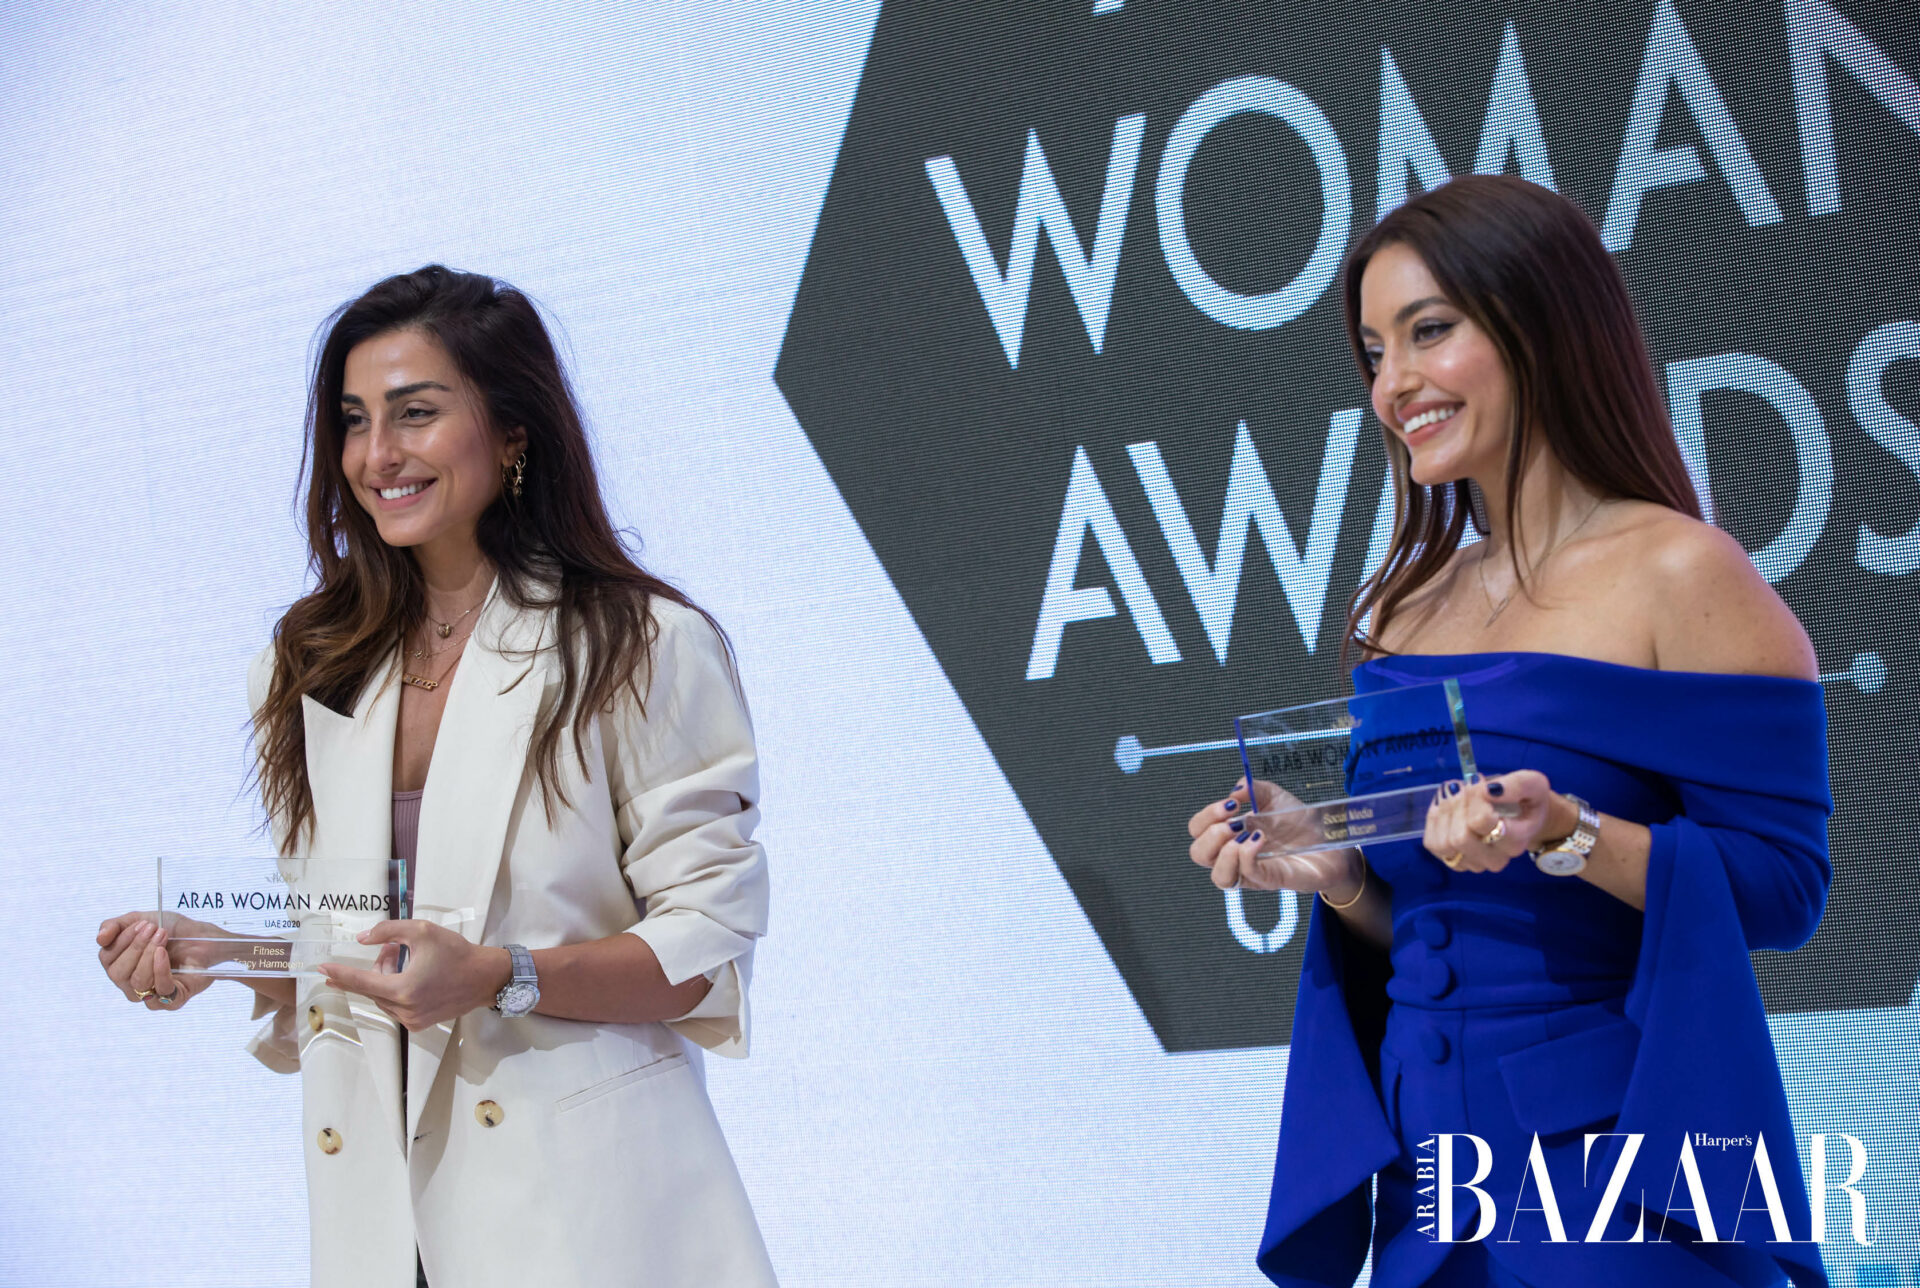 Awards For Bayat, Humpy, Harika As International Women's Day Is